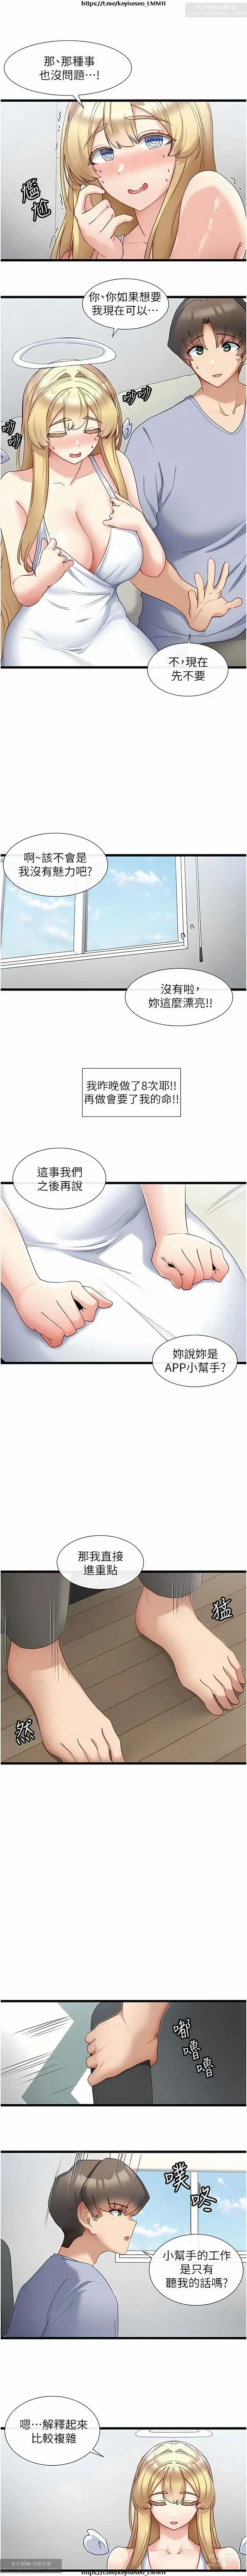 Page 26 of manga 脱单神器 28-55 完结